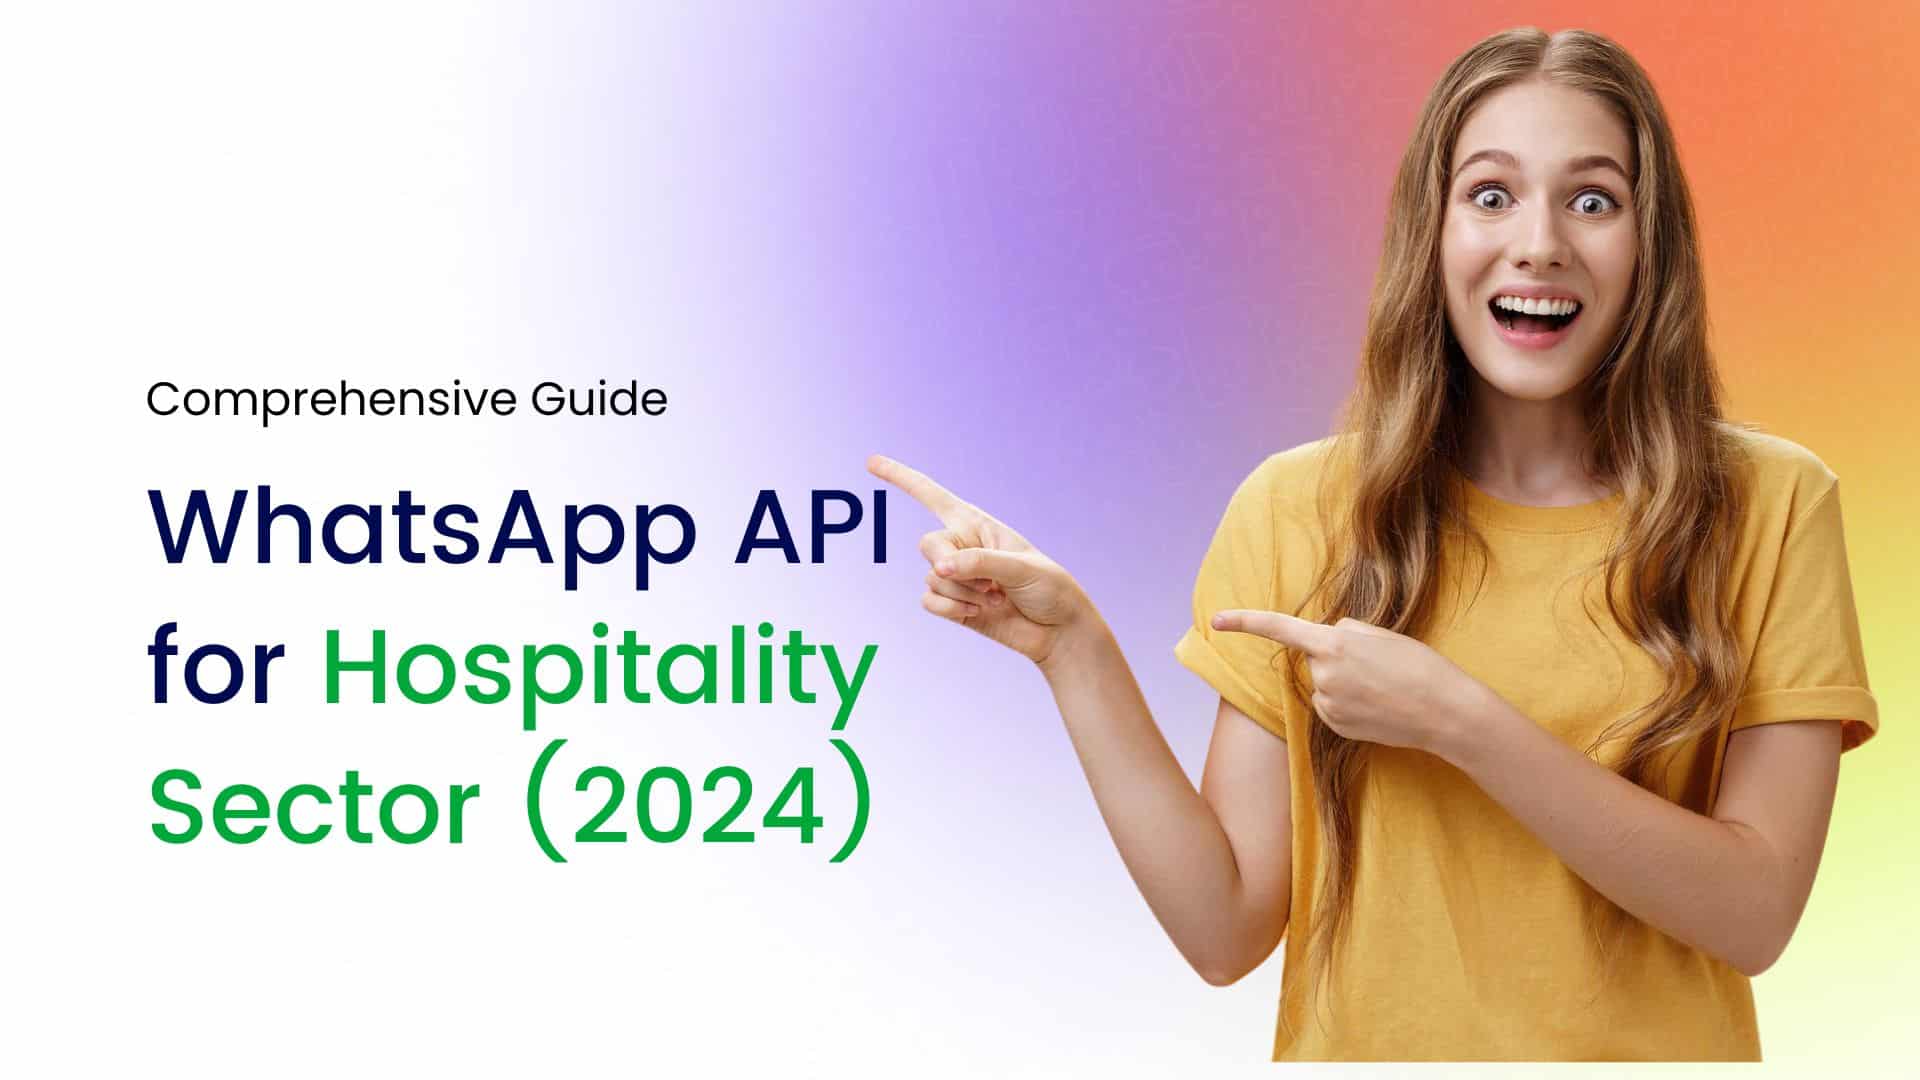 WhatsApp API for Hospitality Sector (2024)